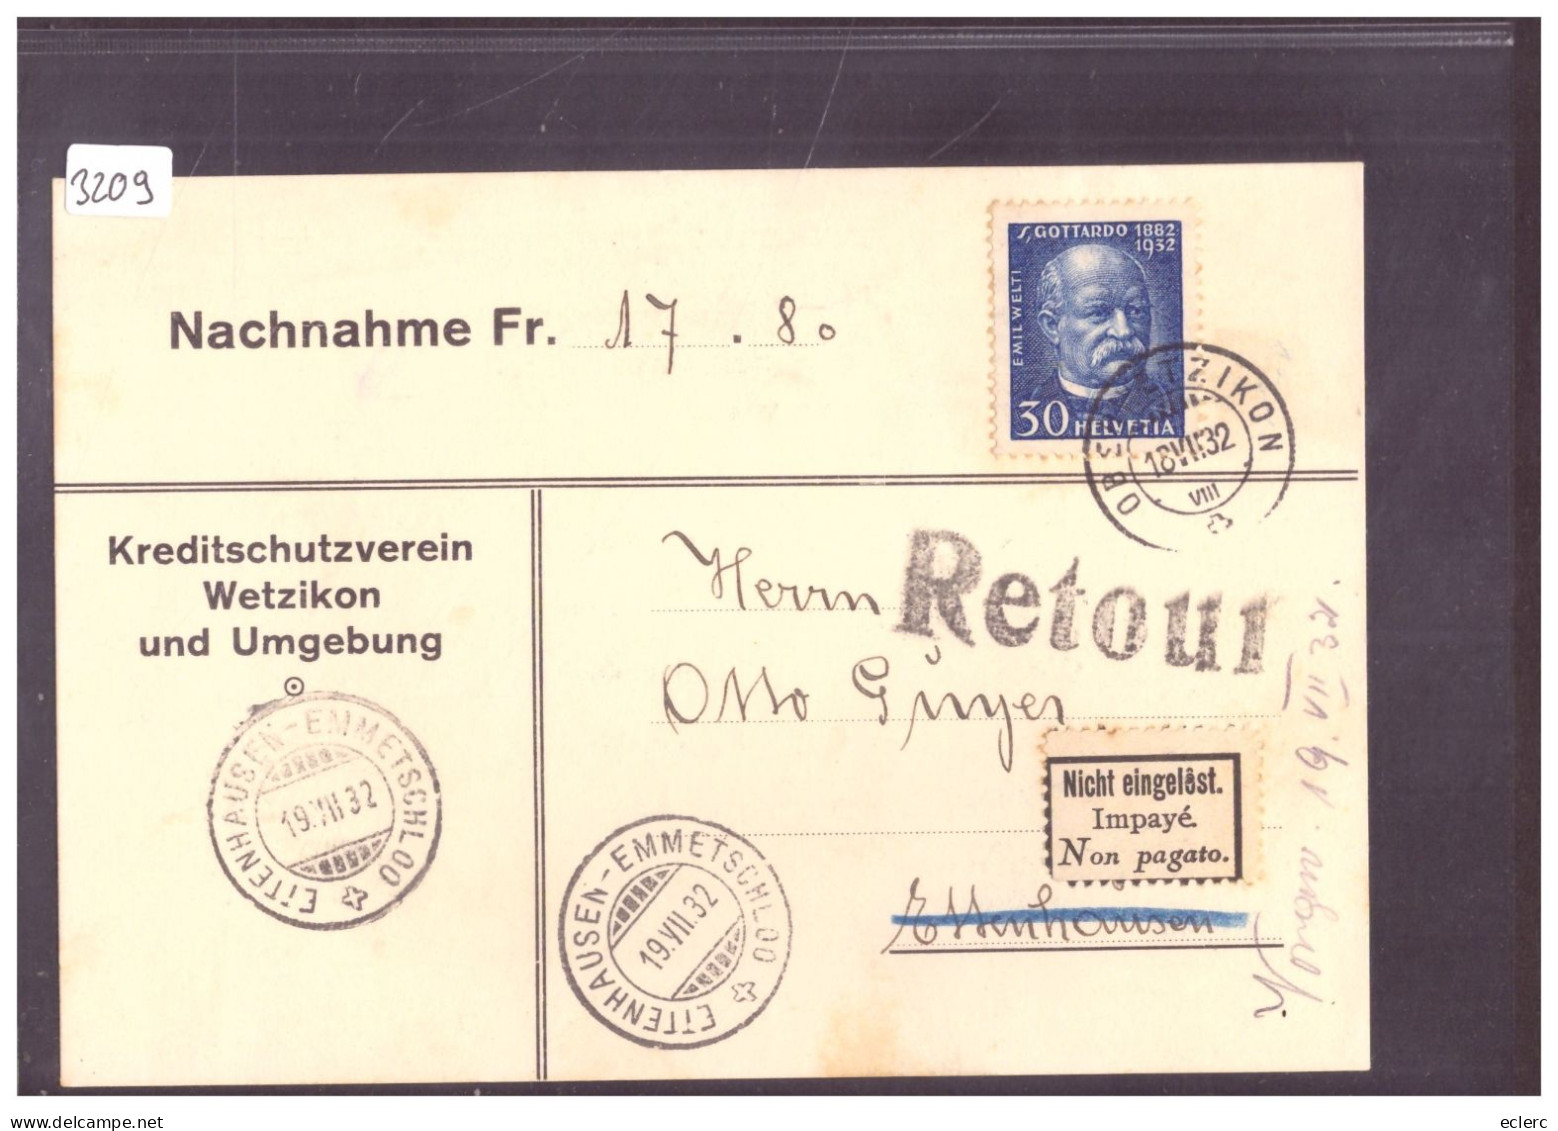 CARTE NACHNAHME - KREDITSCHUTZVEREIN WETZIKON - ETIQUETTE IMPAYE - Covers & Documents